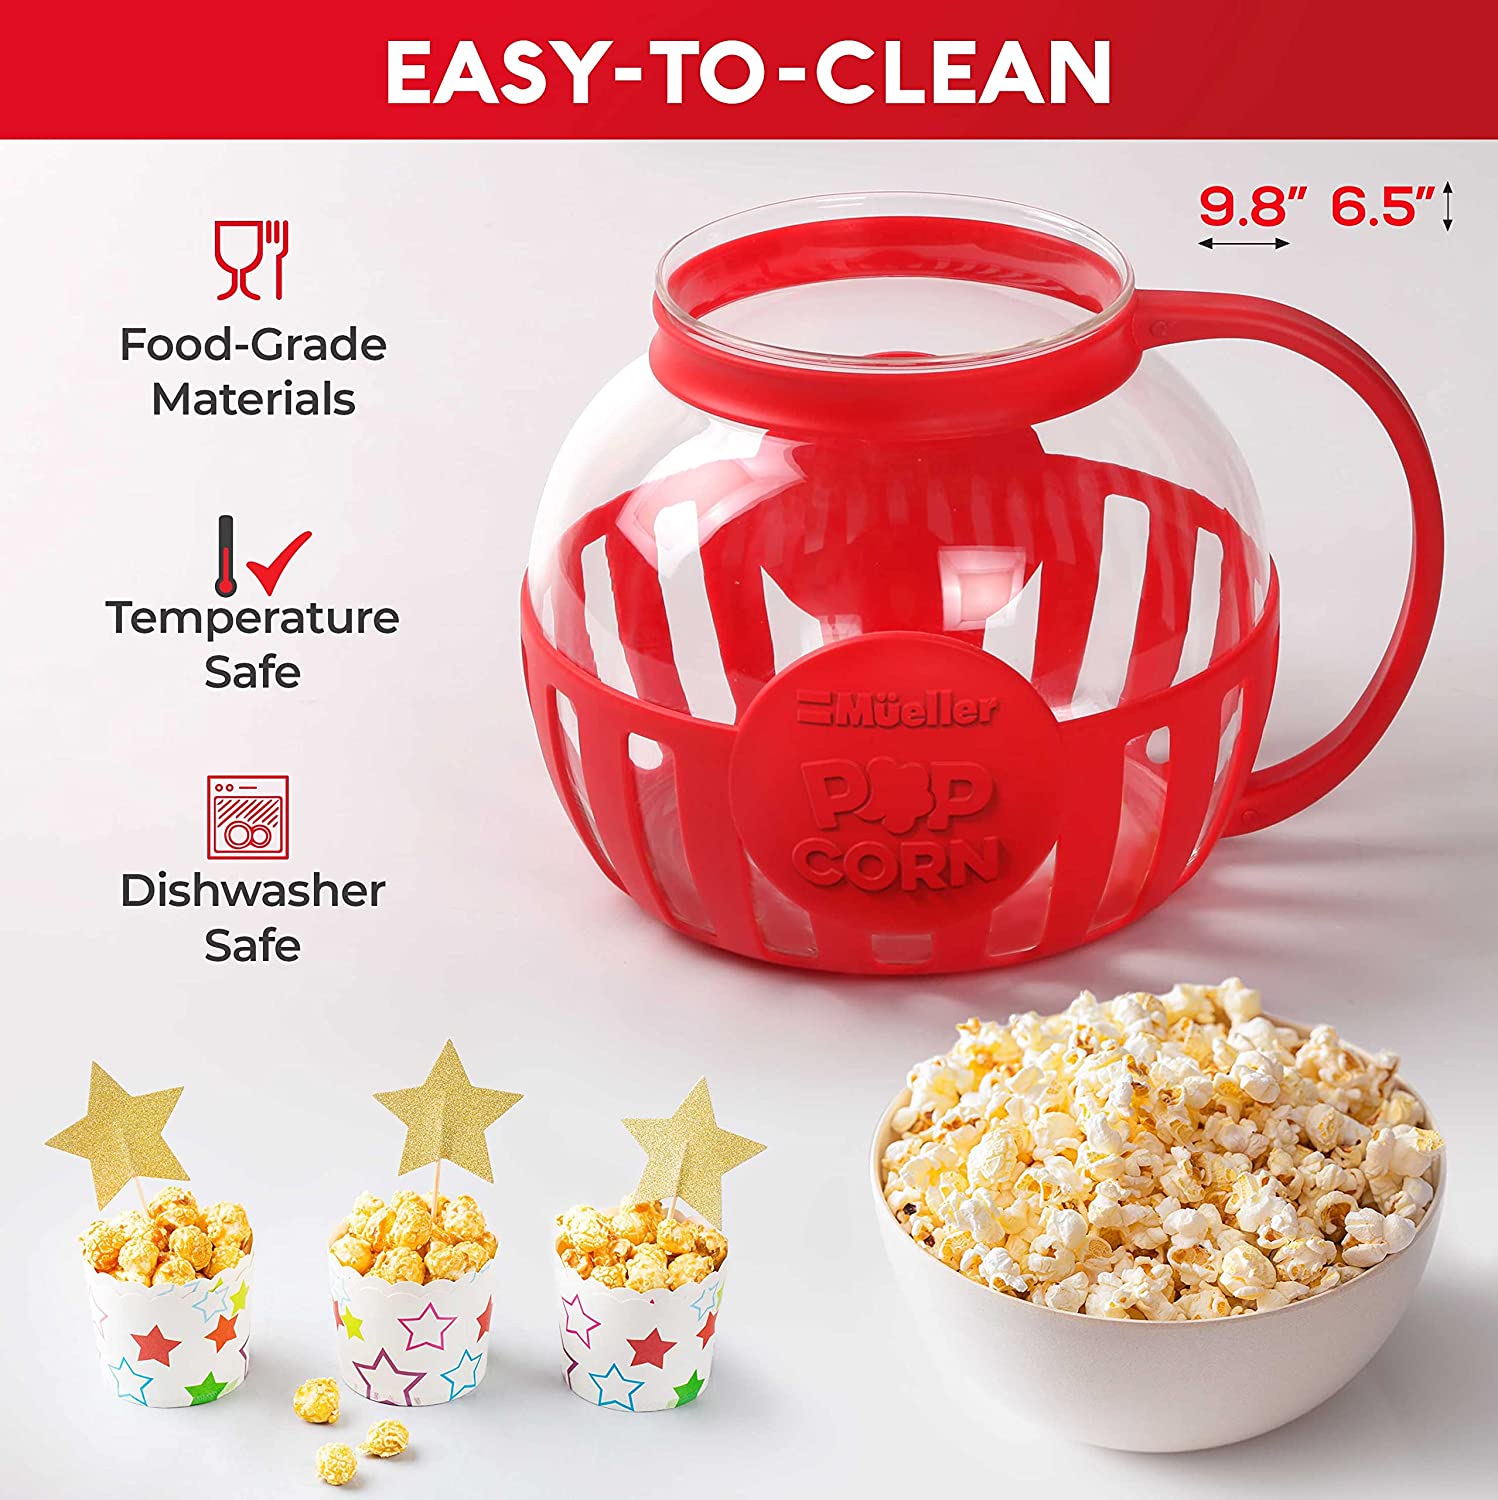 Premium Microwave Popcorn Popper - Red 